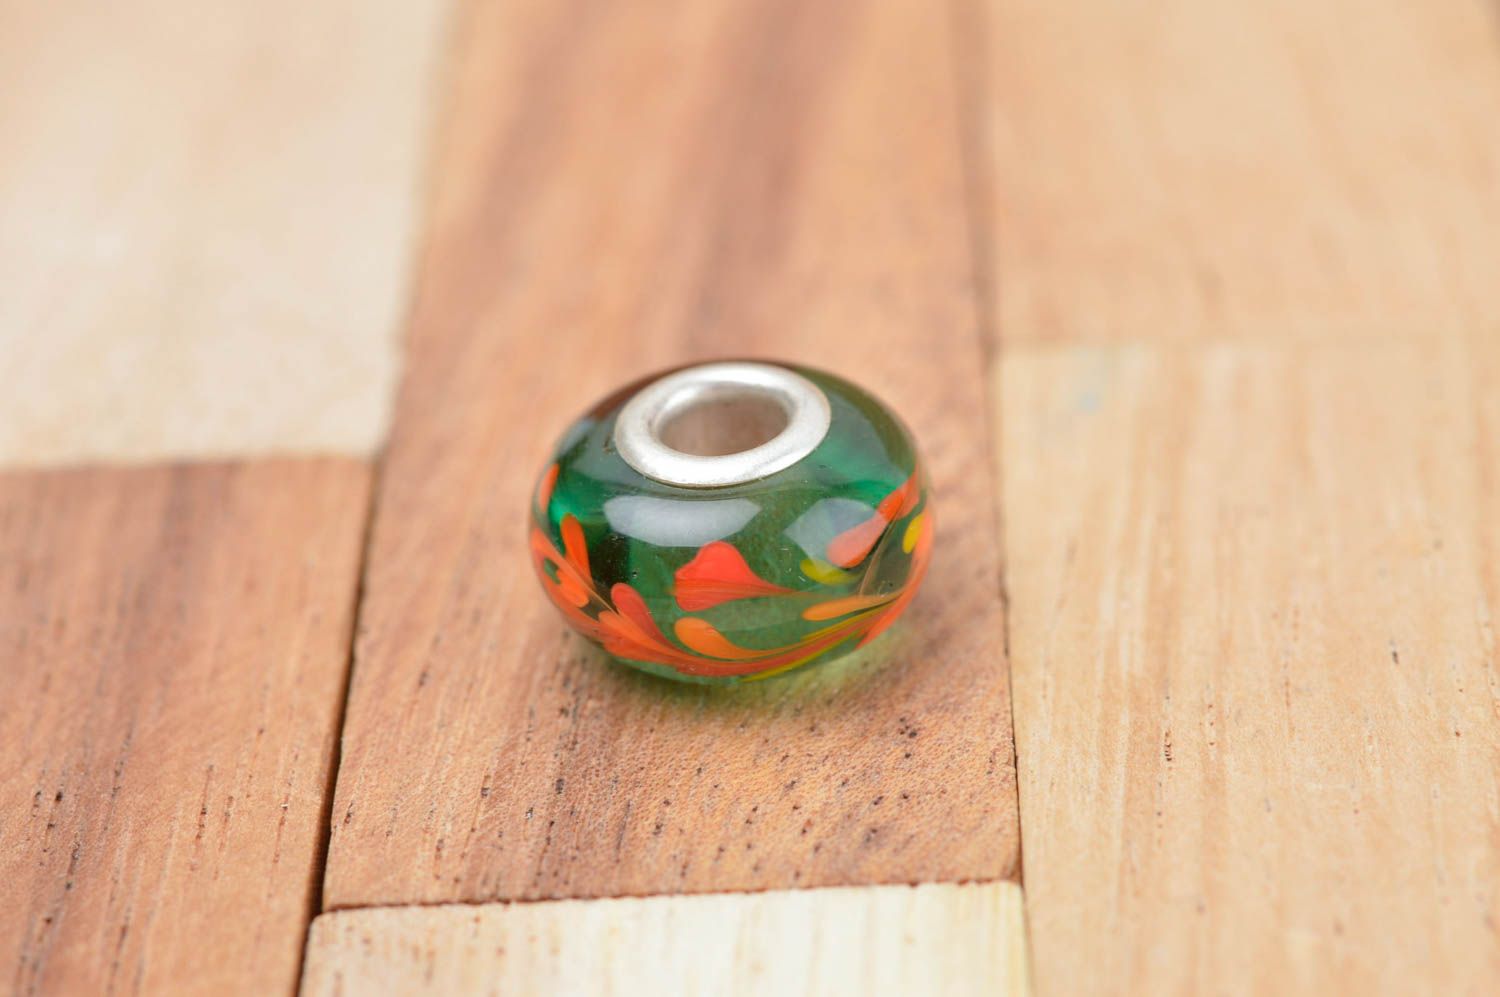 Cuenta artesanal de cristal verde fornitura para manualidades souvenir original foto 2